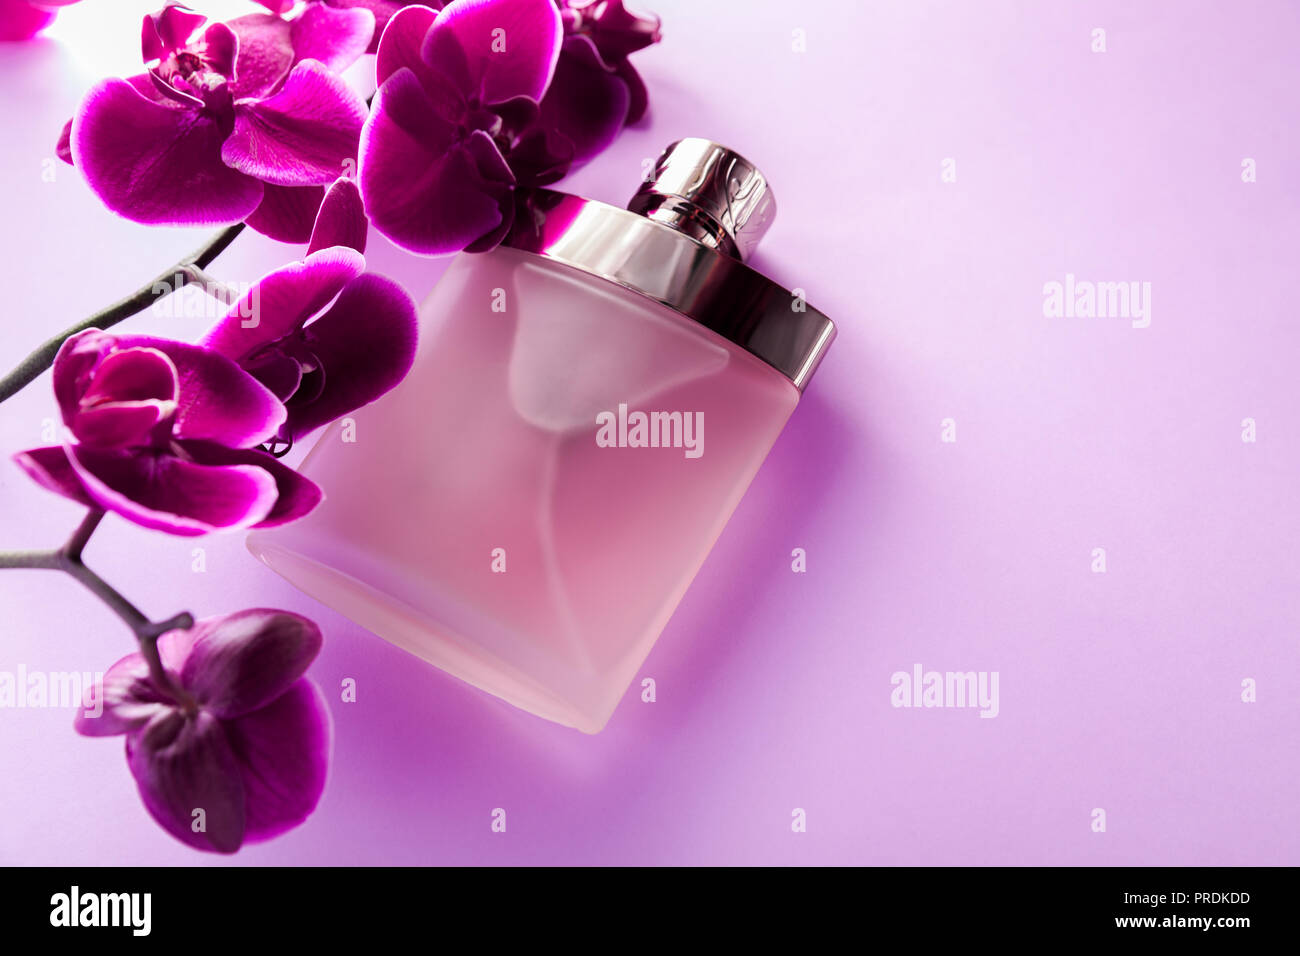 purple bottle of perfume